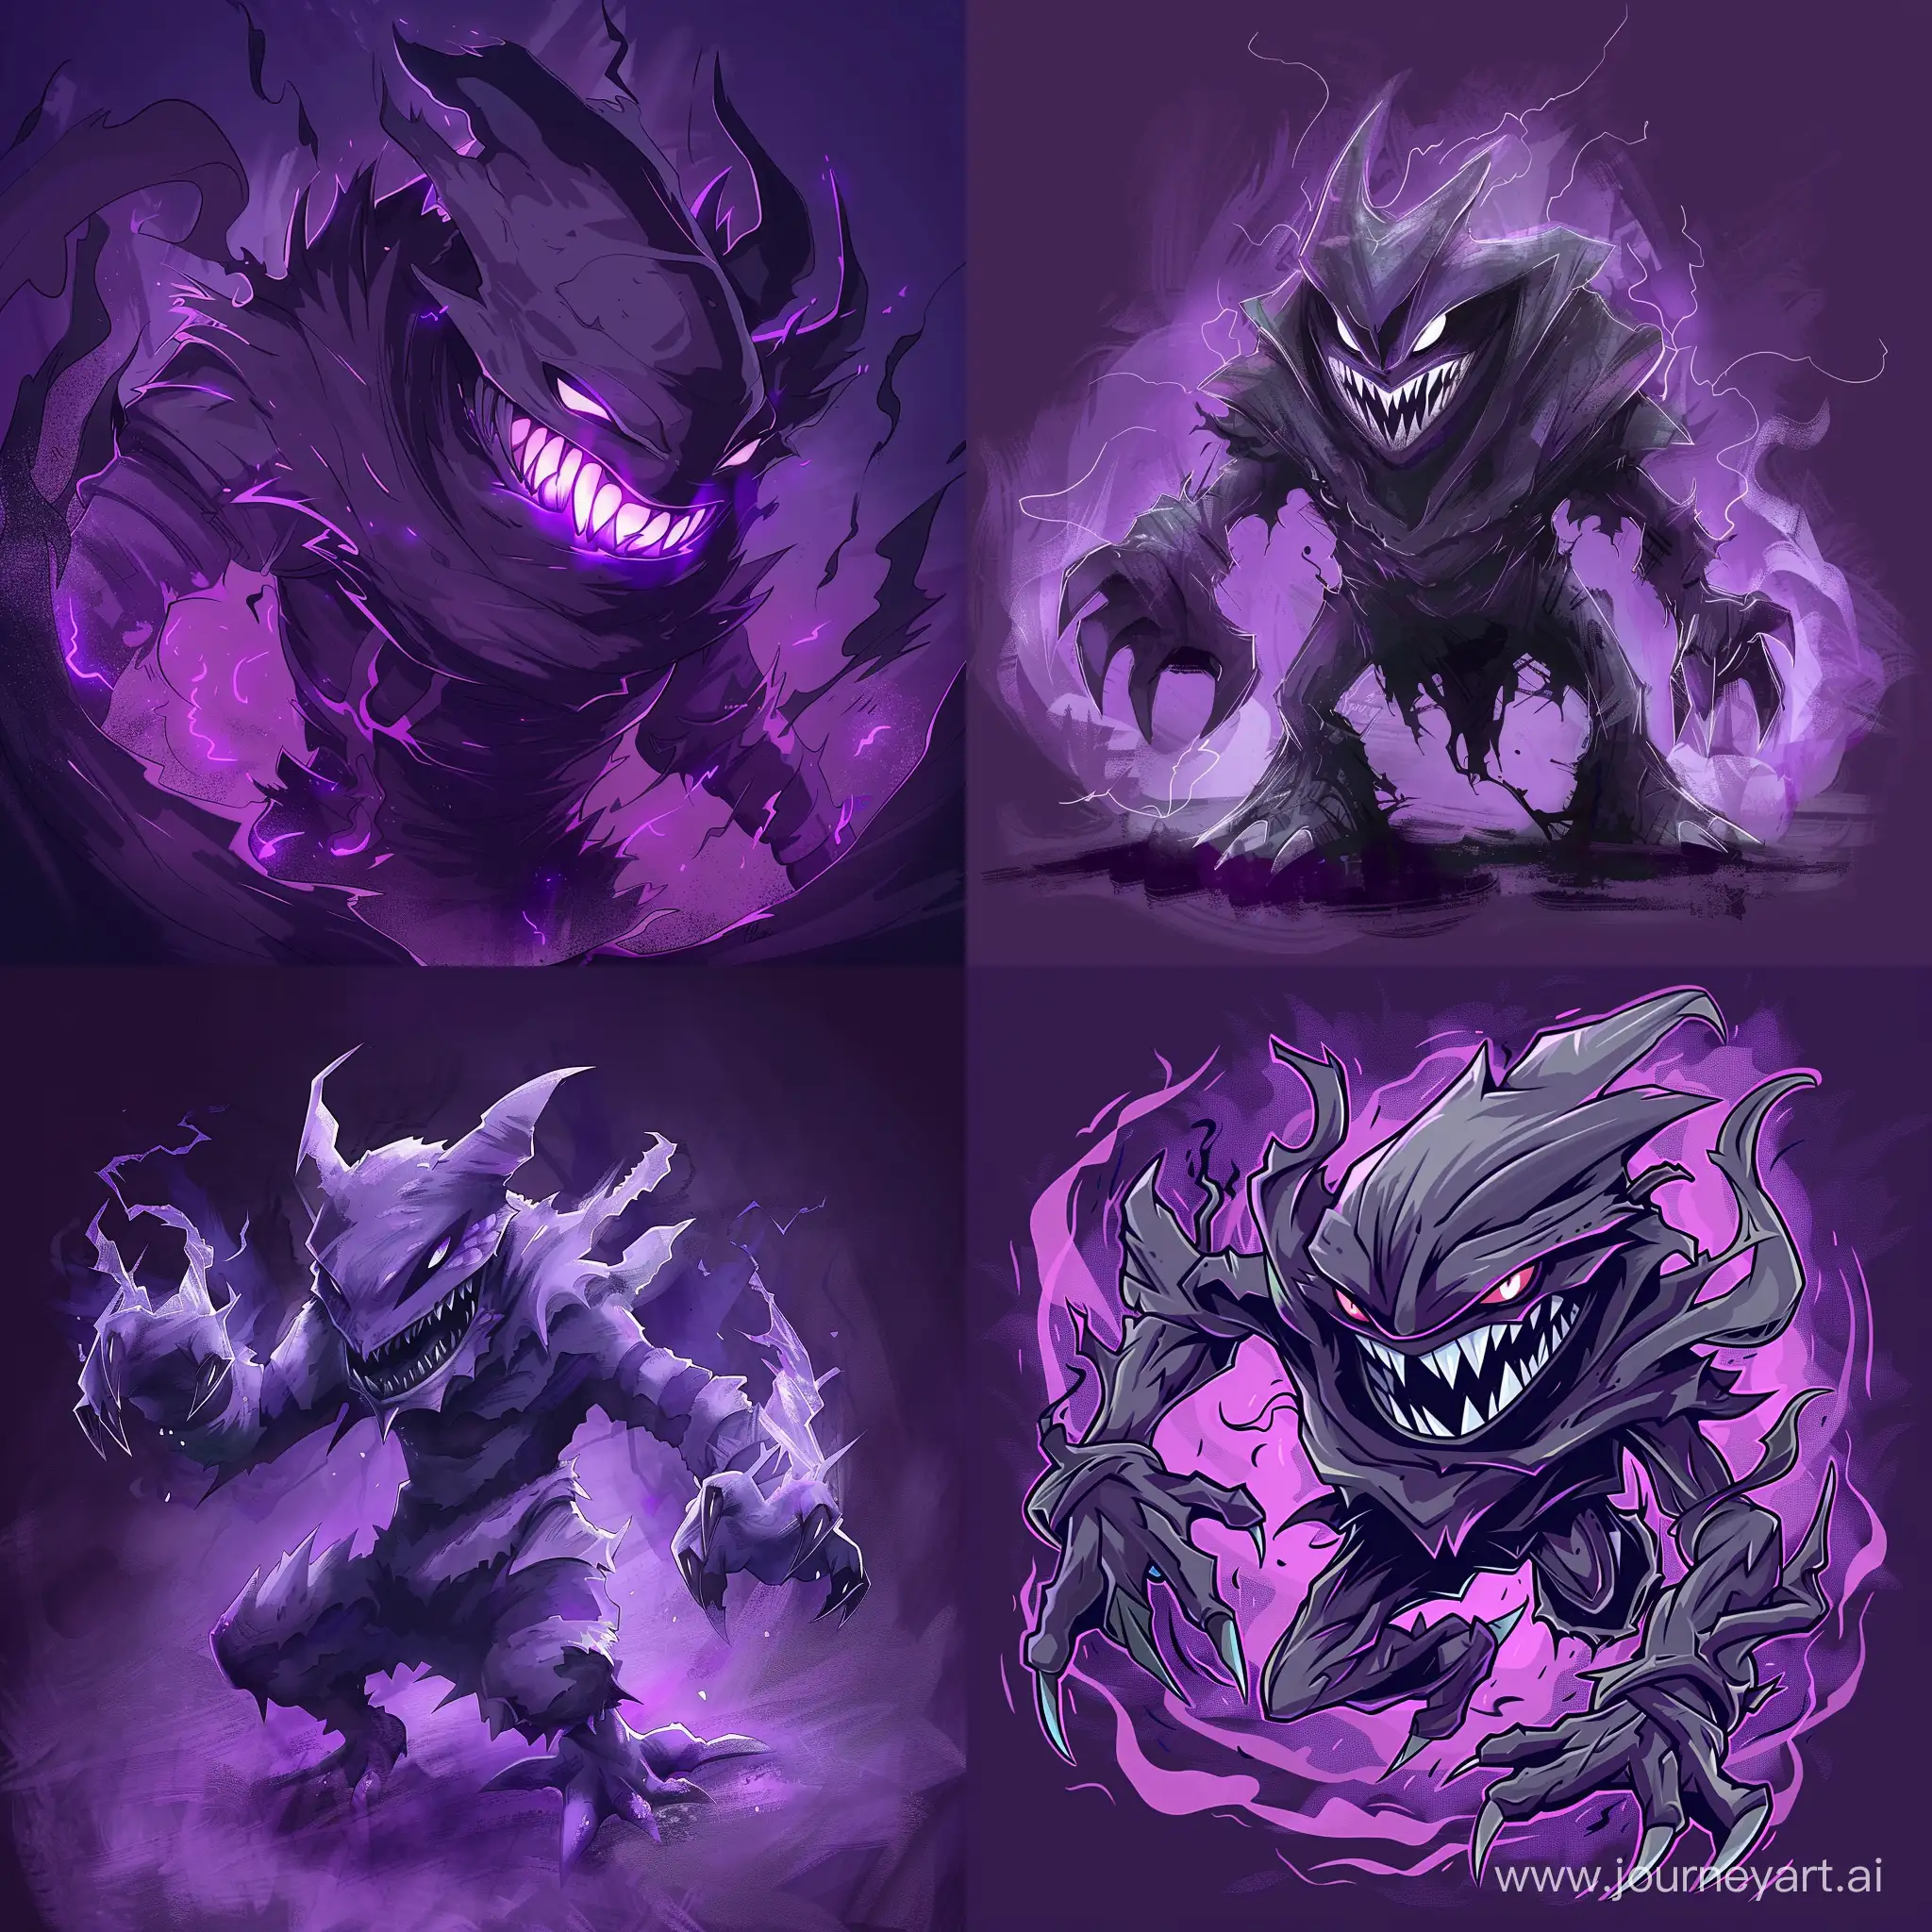 Draw the Haunter pokemon in dark fantasy style, purple background